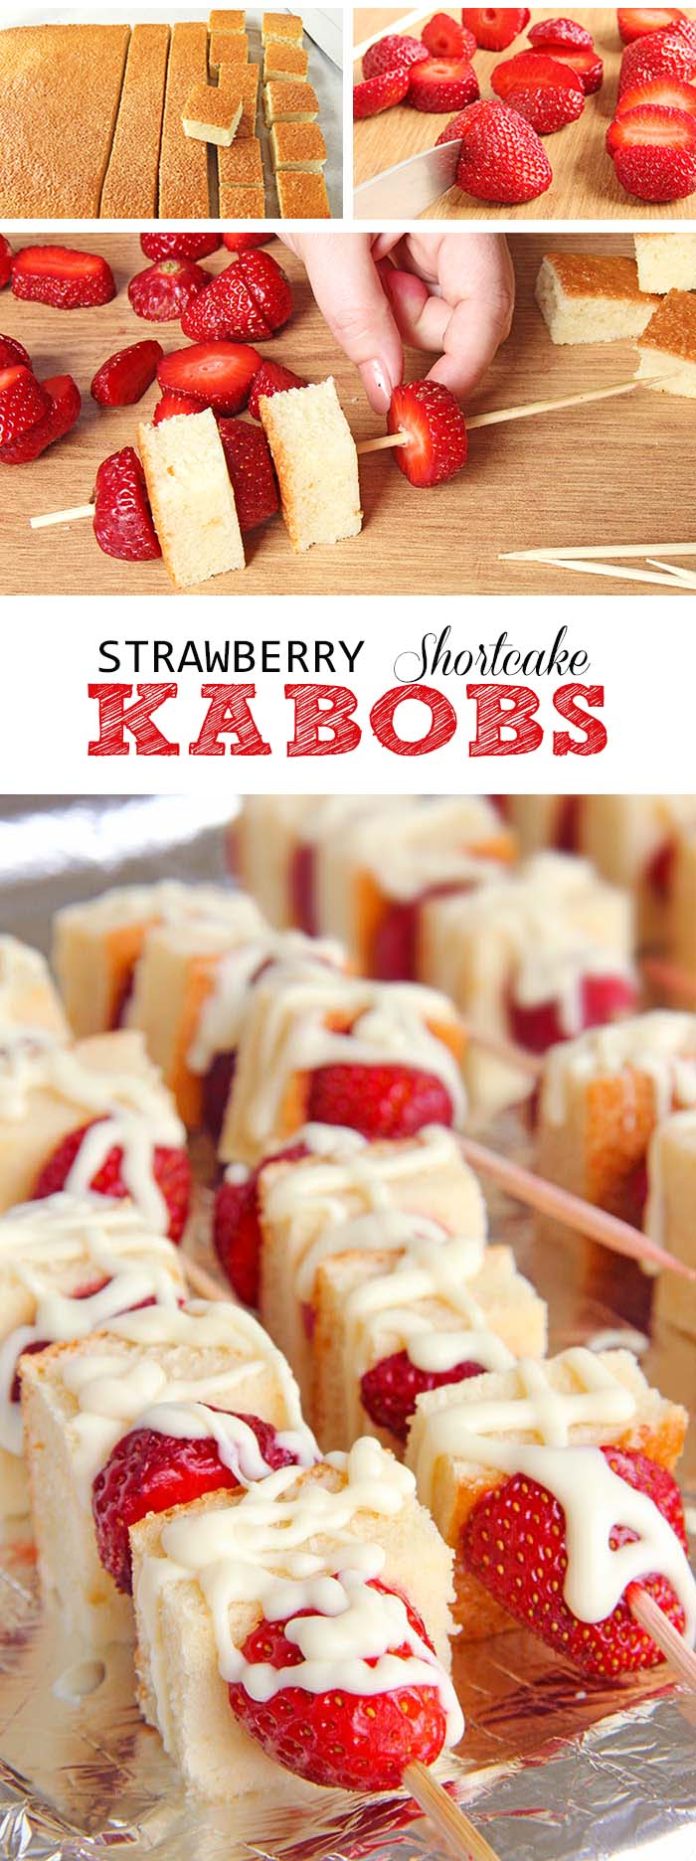 Strawberry Shortcake Kabobs | Amazingly Delicious ⋆ Food Curation